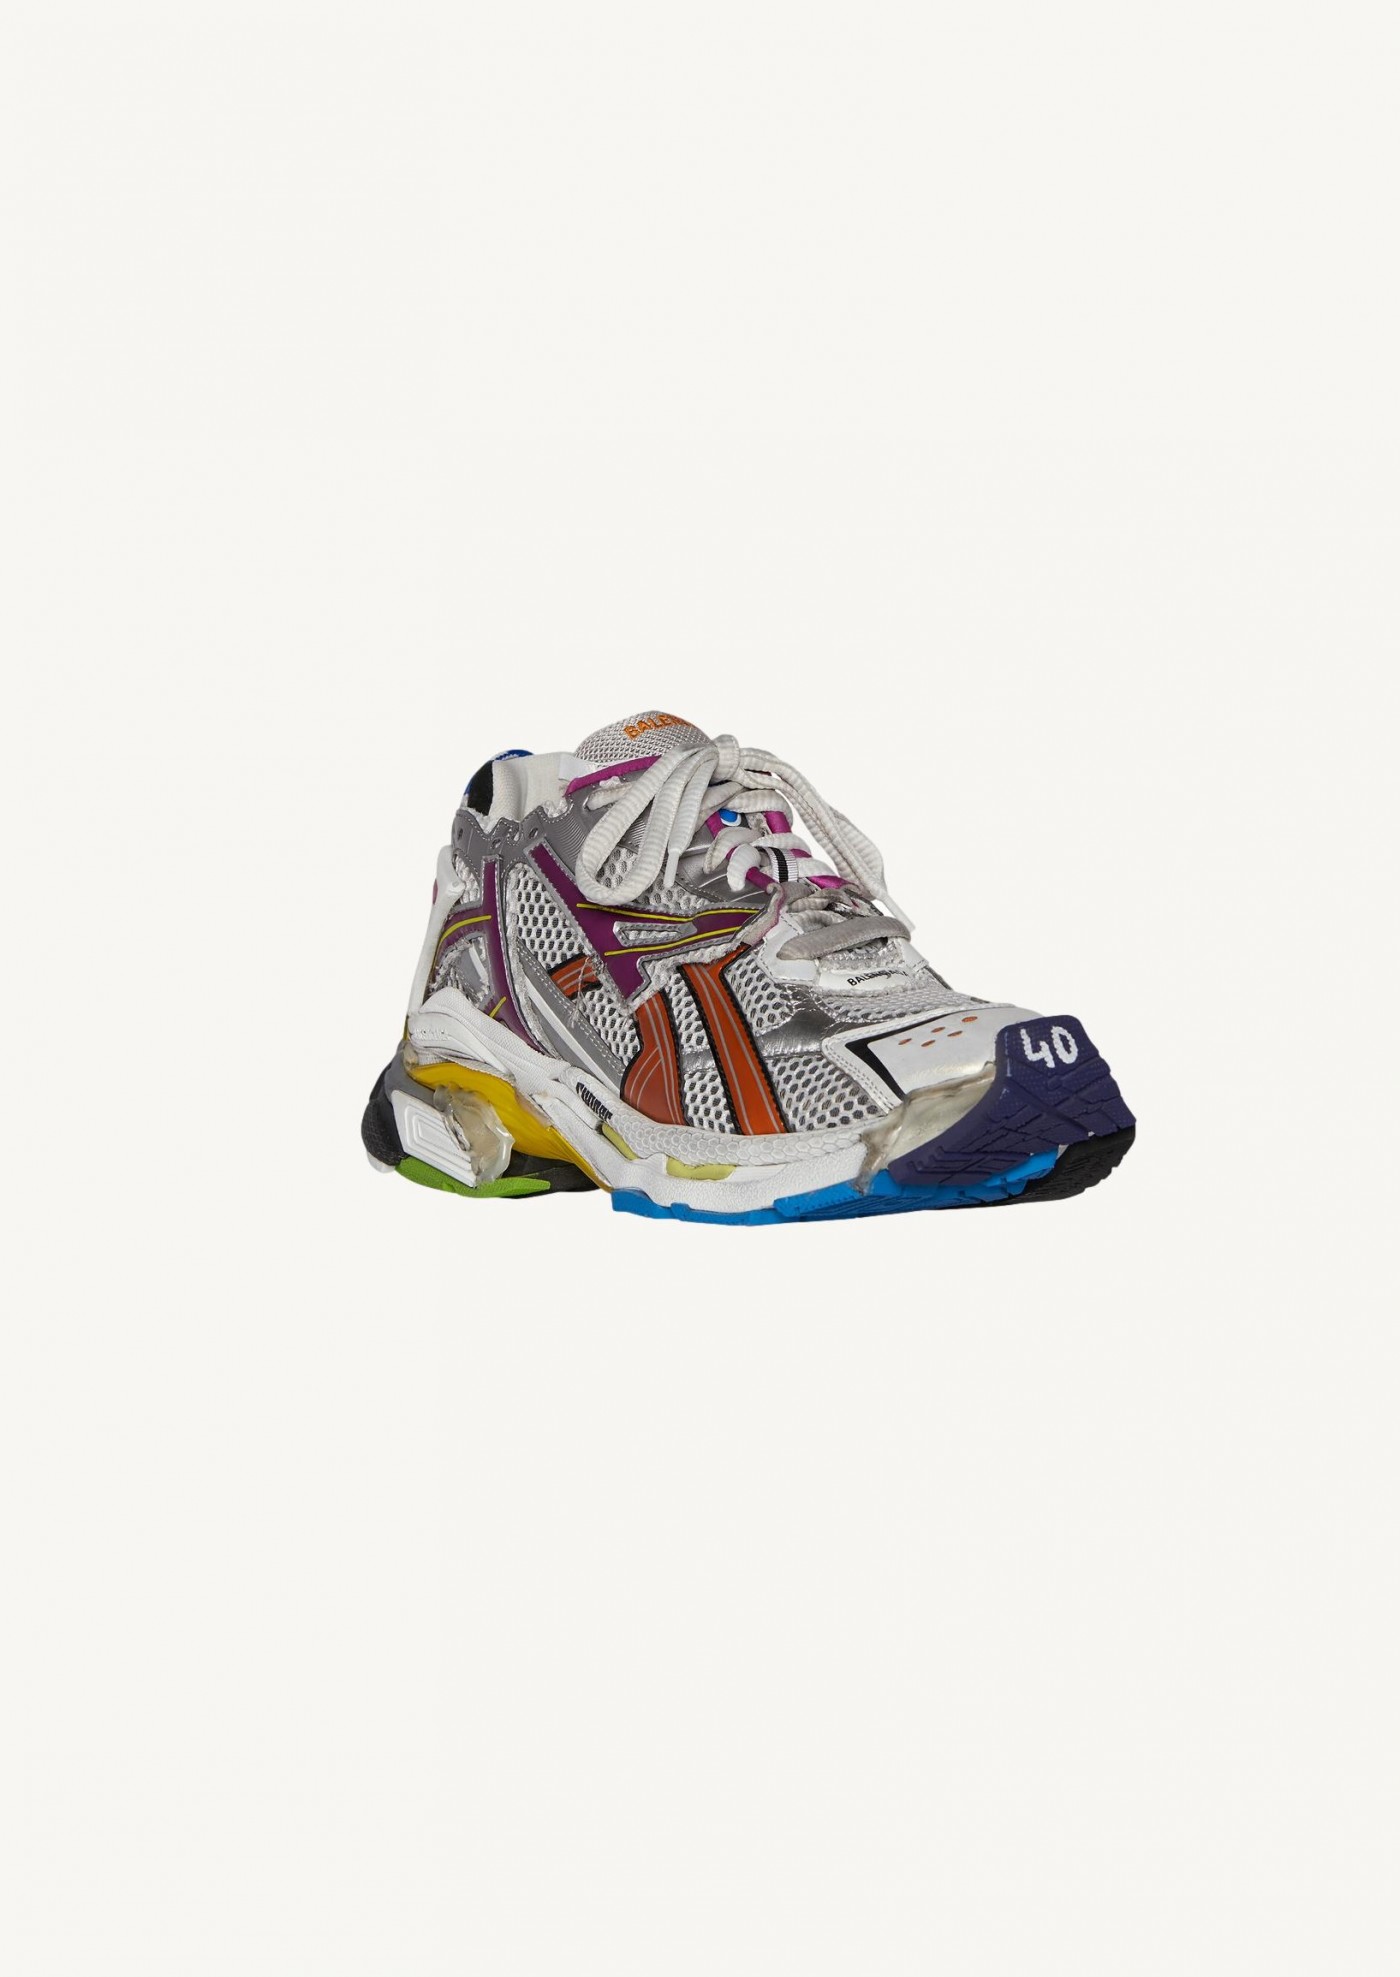 Multicolored Runner sneakers